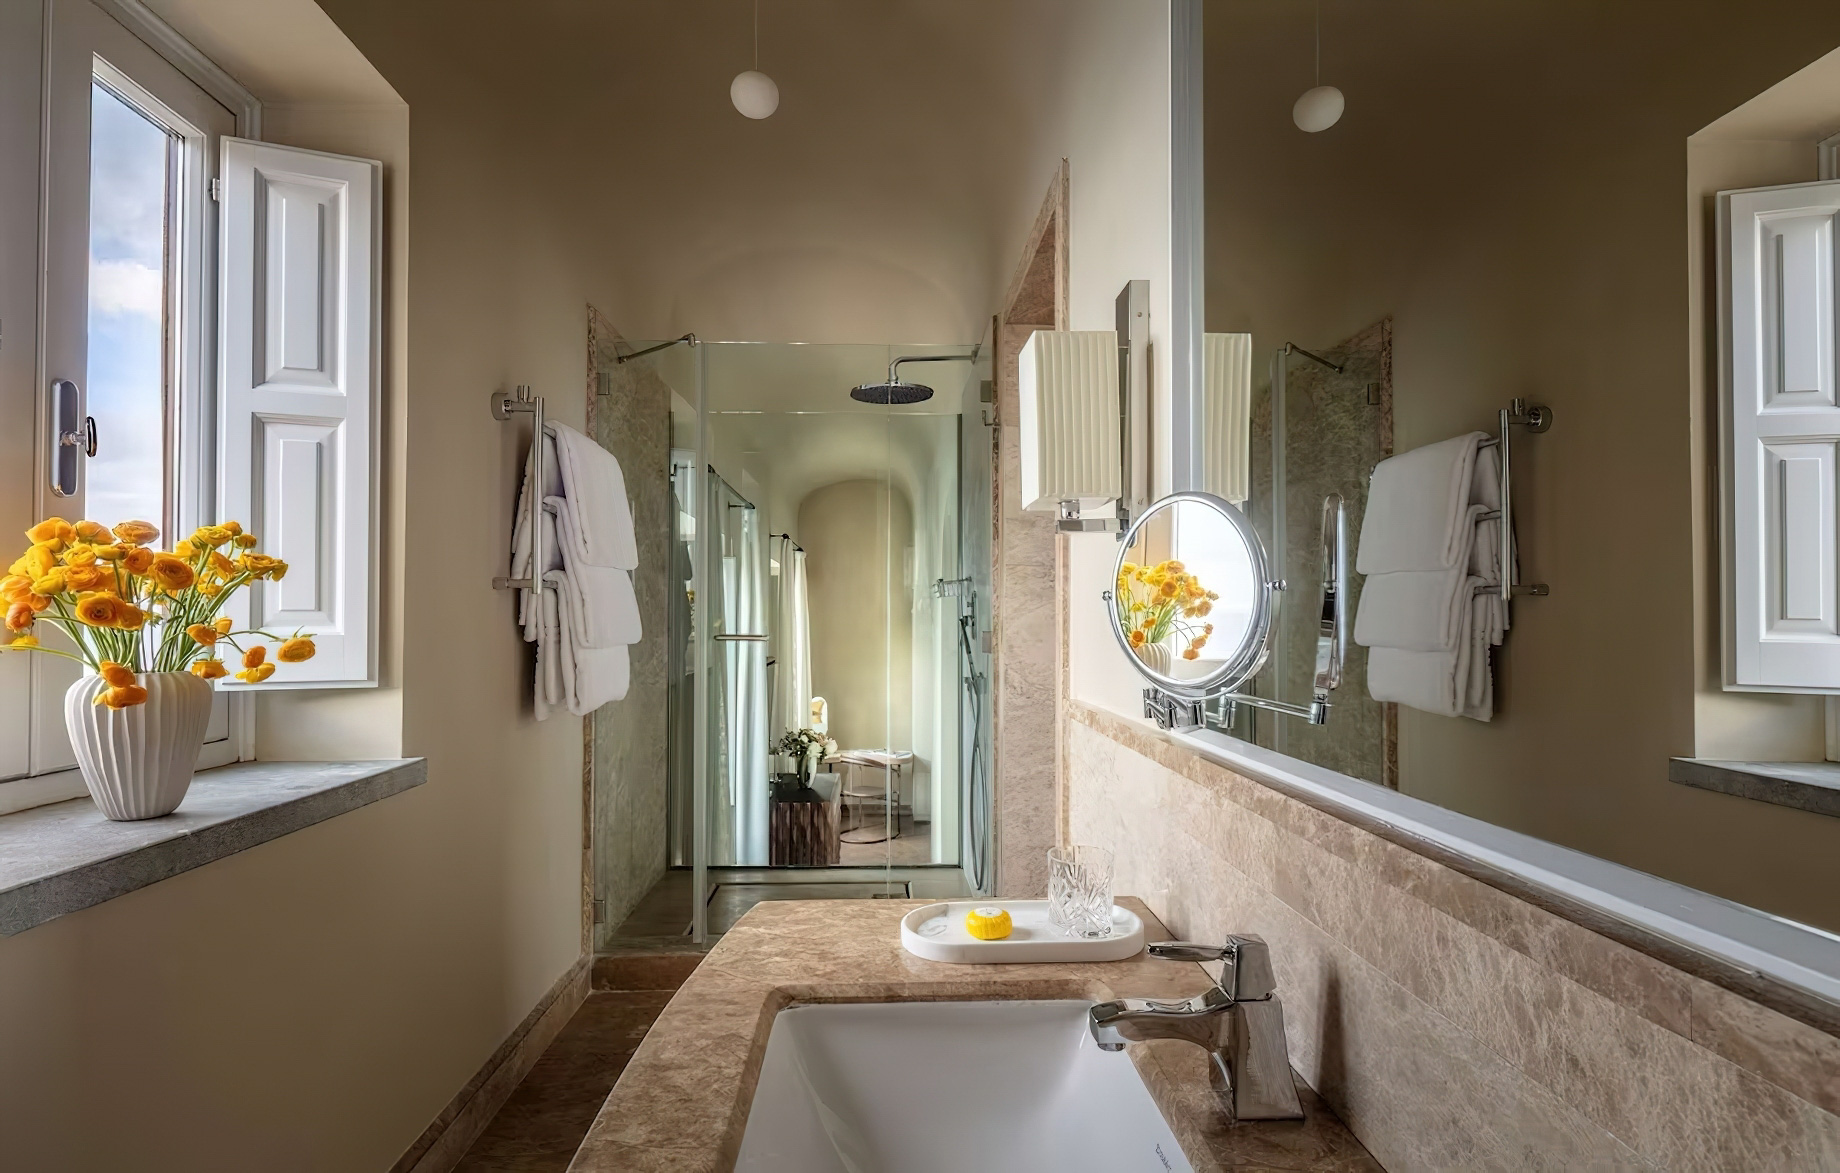 Anantara Convento Di Amalfi Grand Hotel - Italy - Guest Bathroom